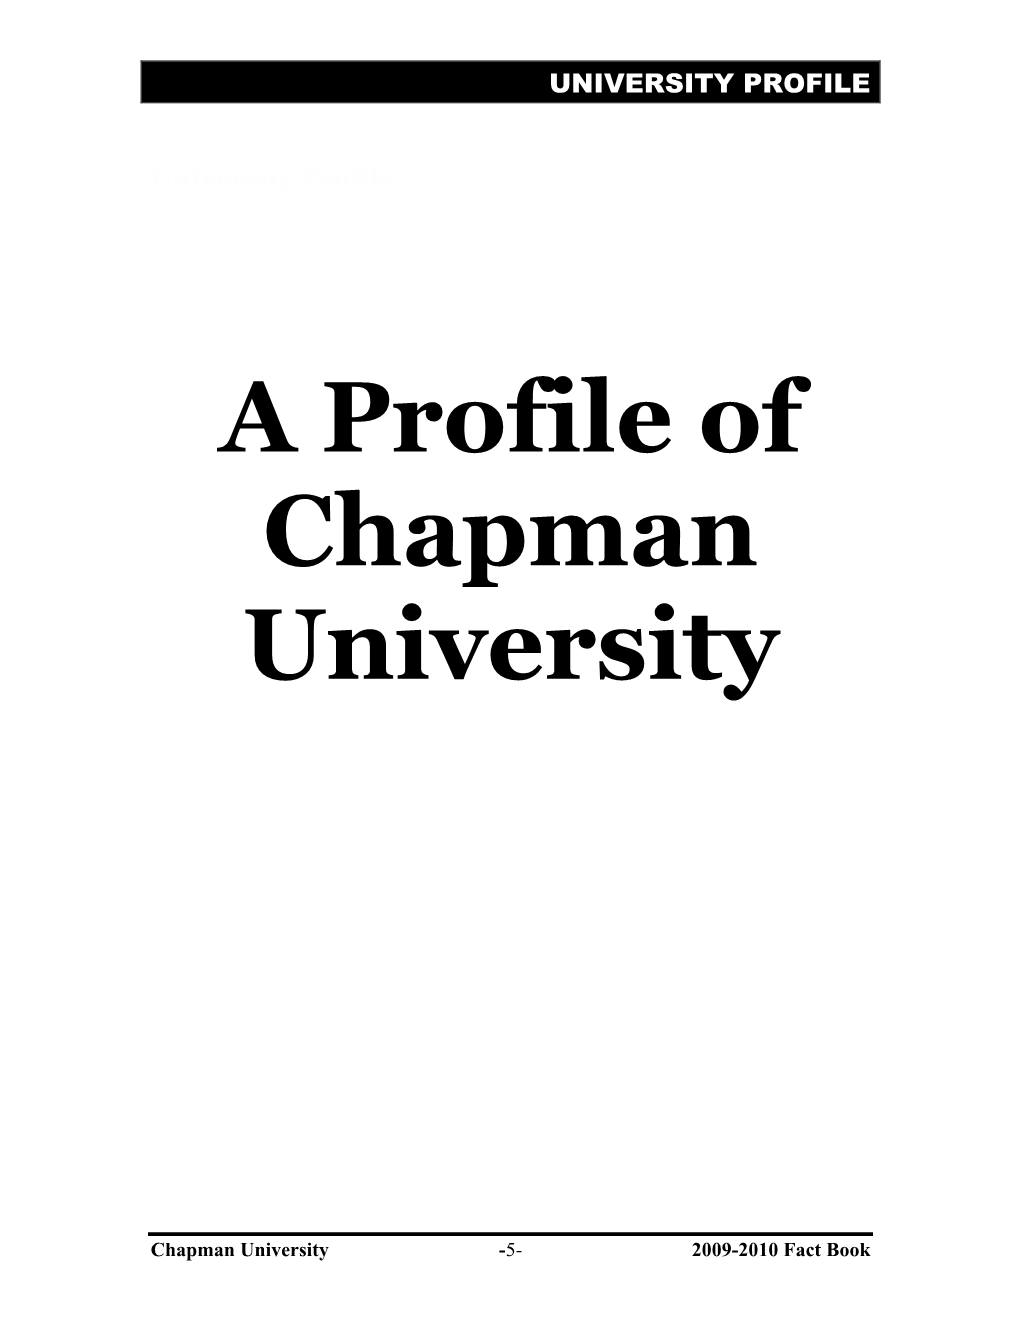 A Profile of Chapman University